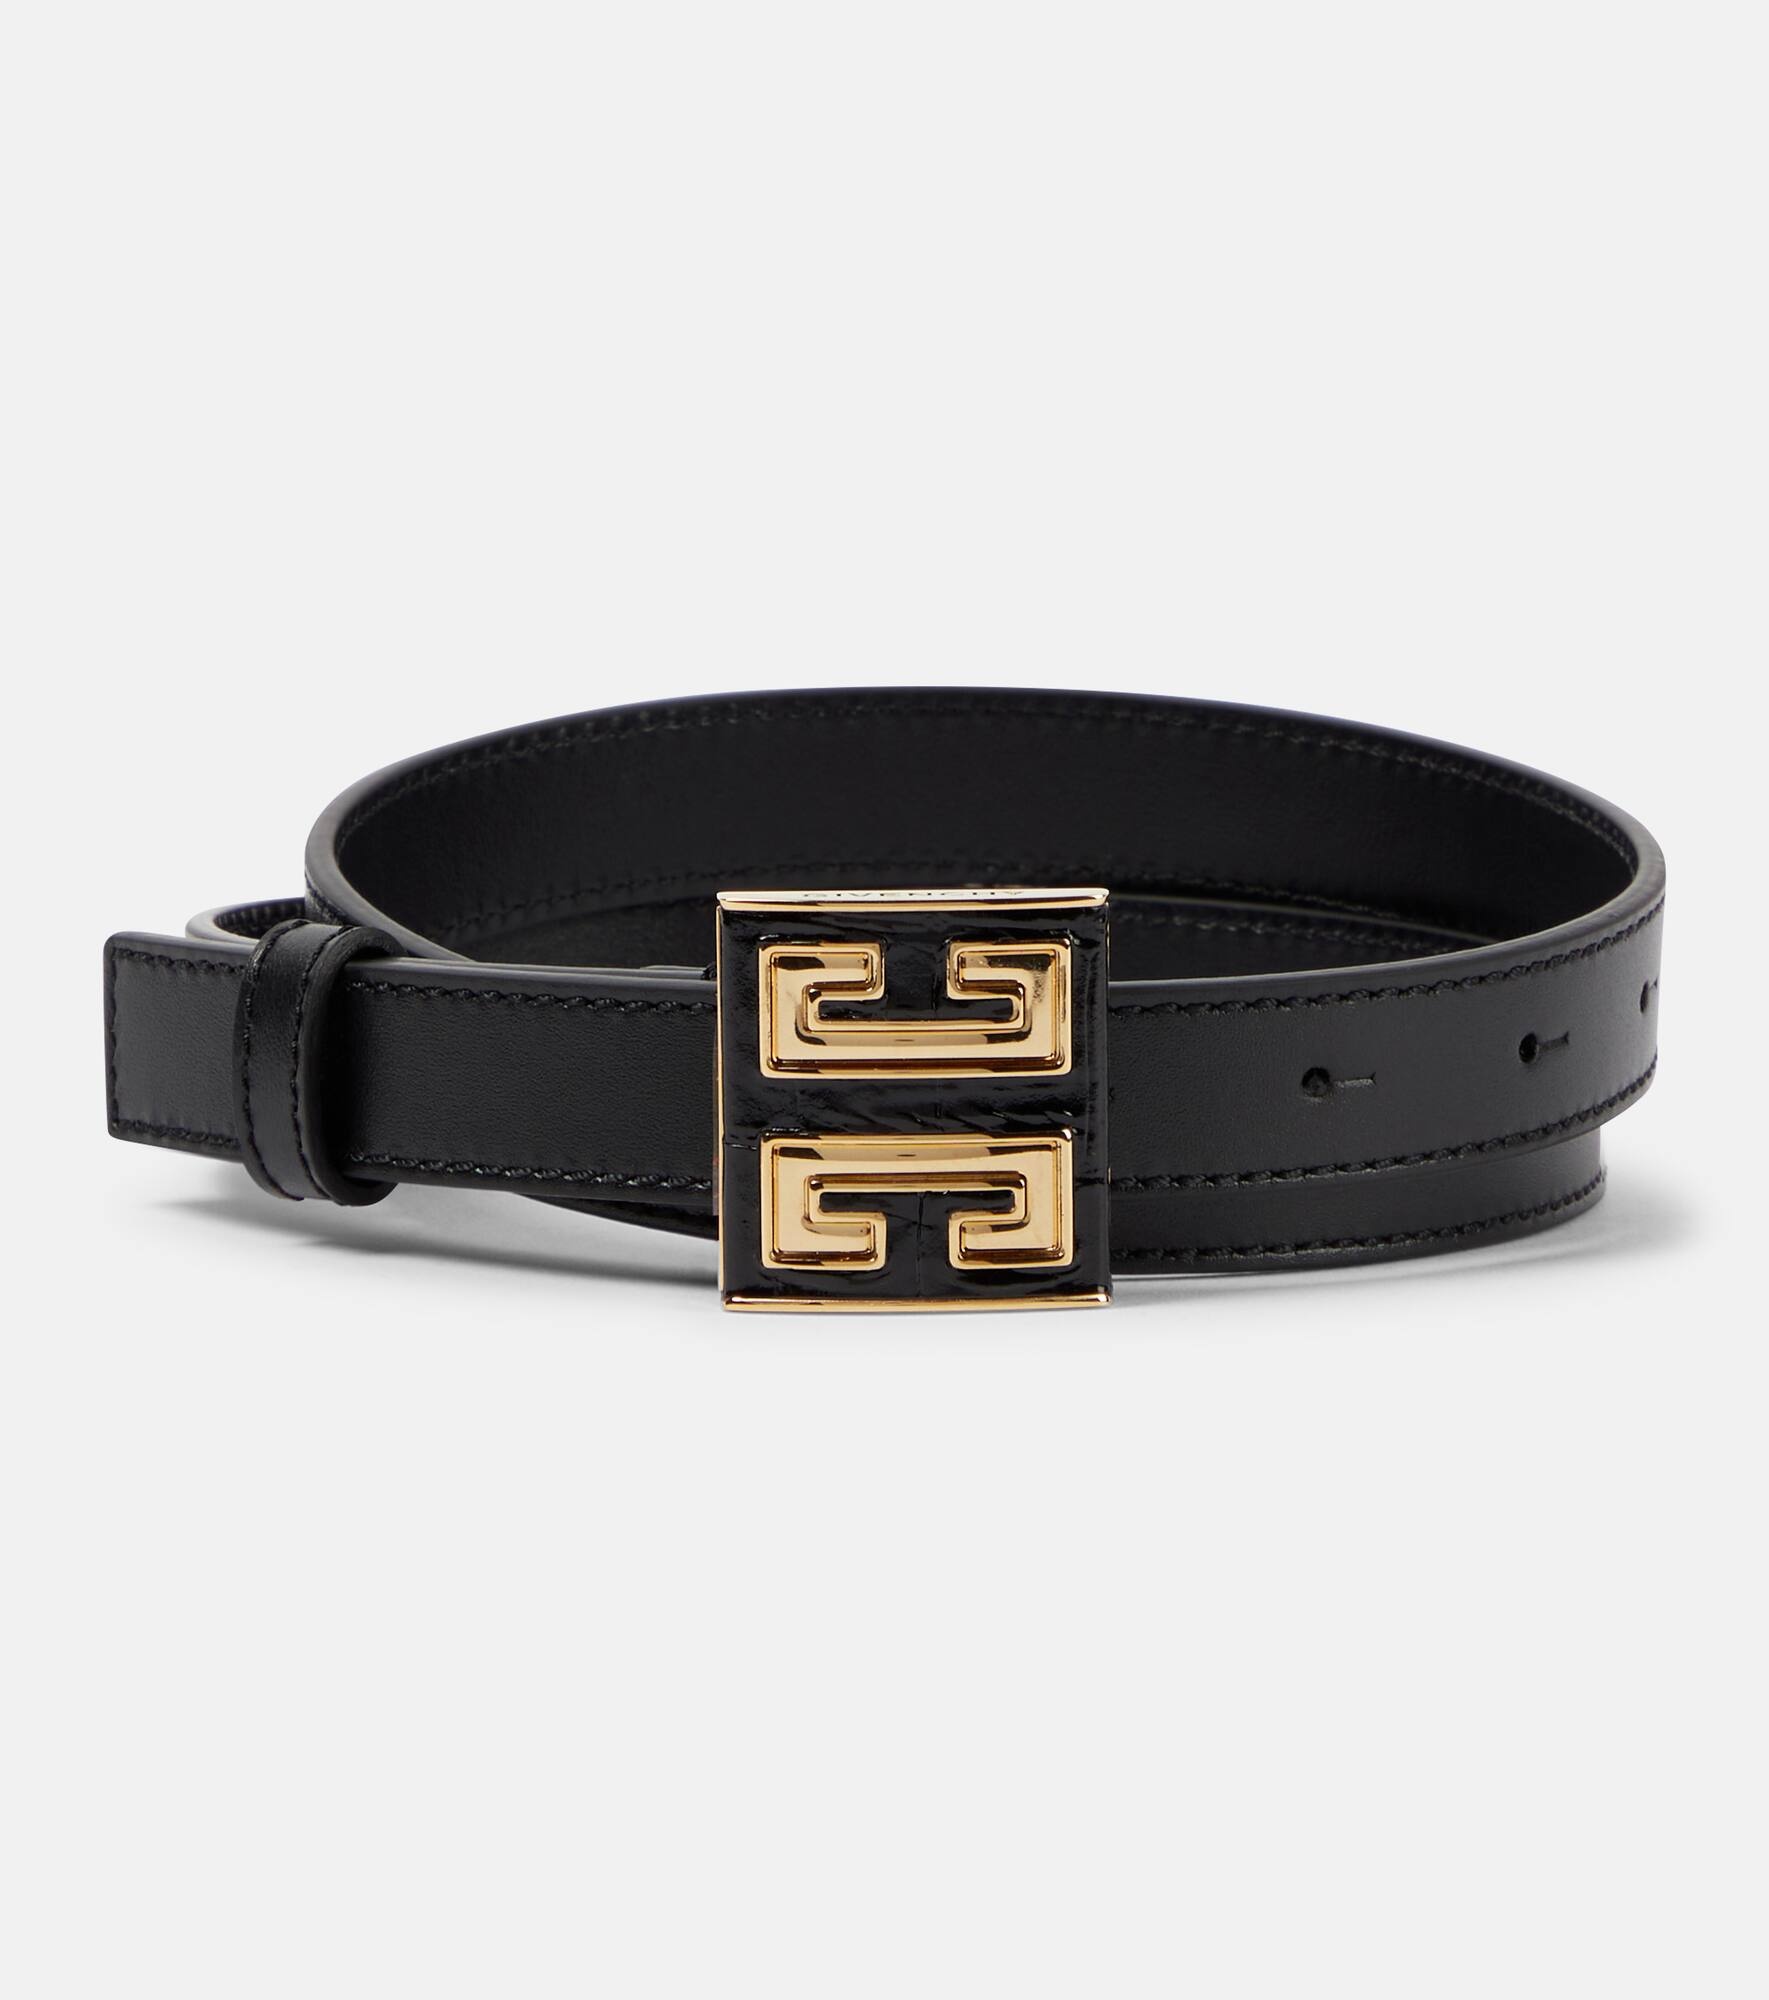 4G leather belt - 1